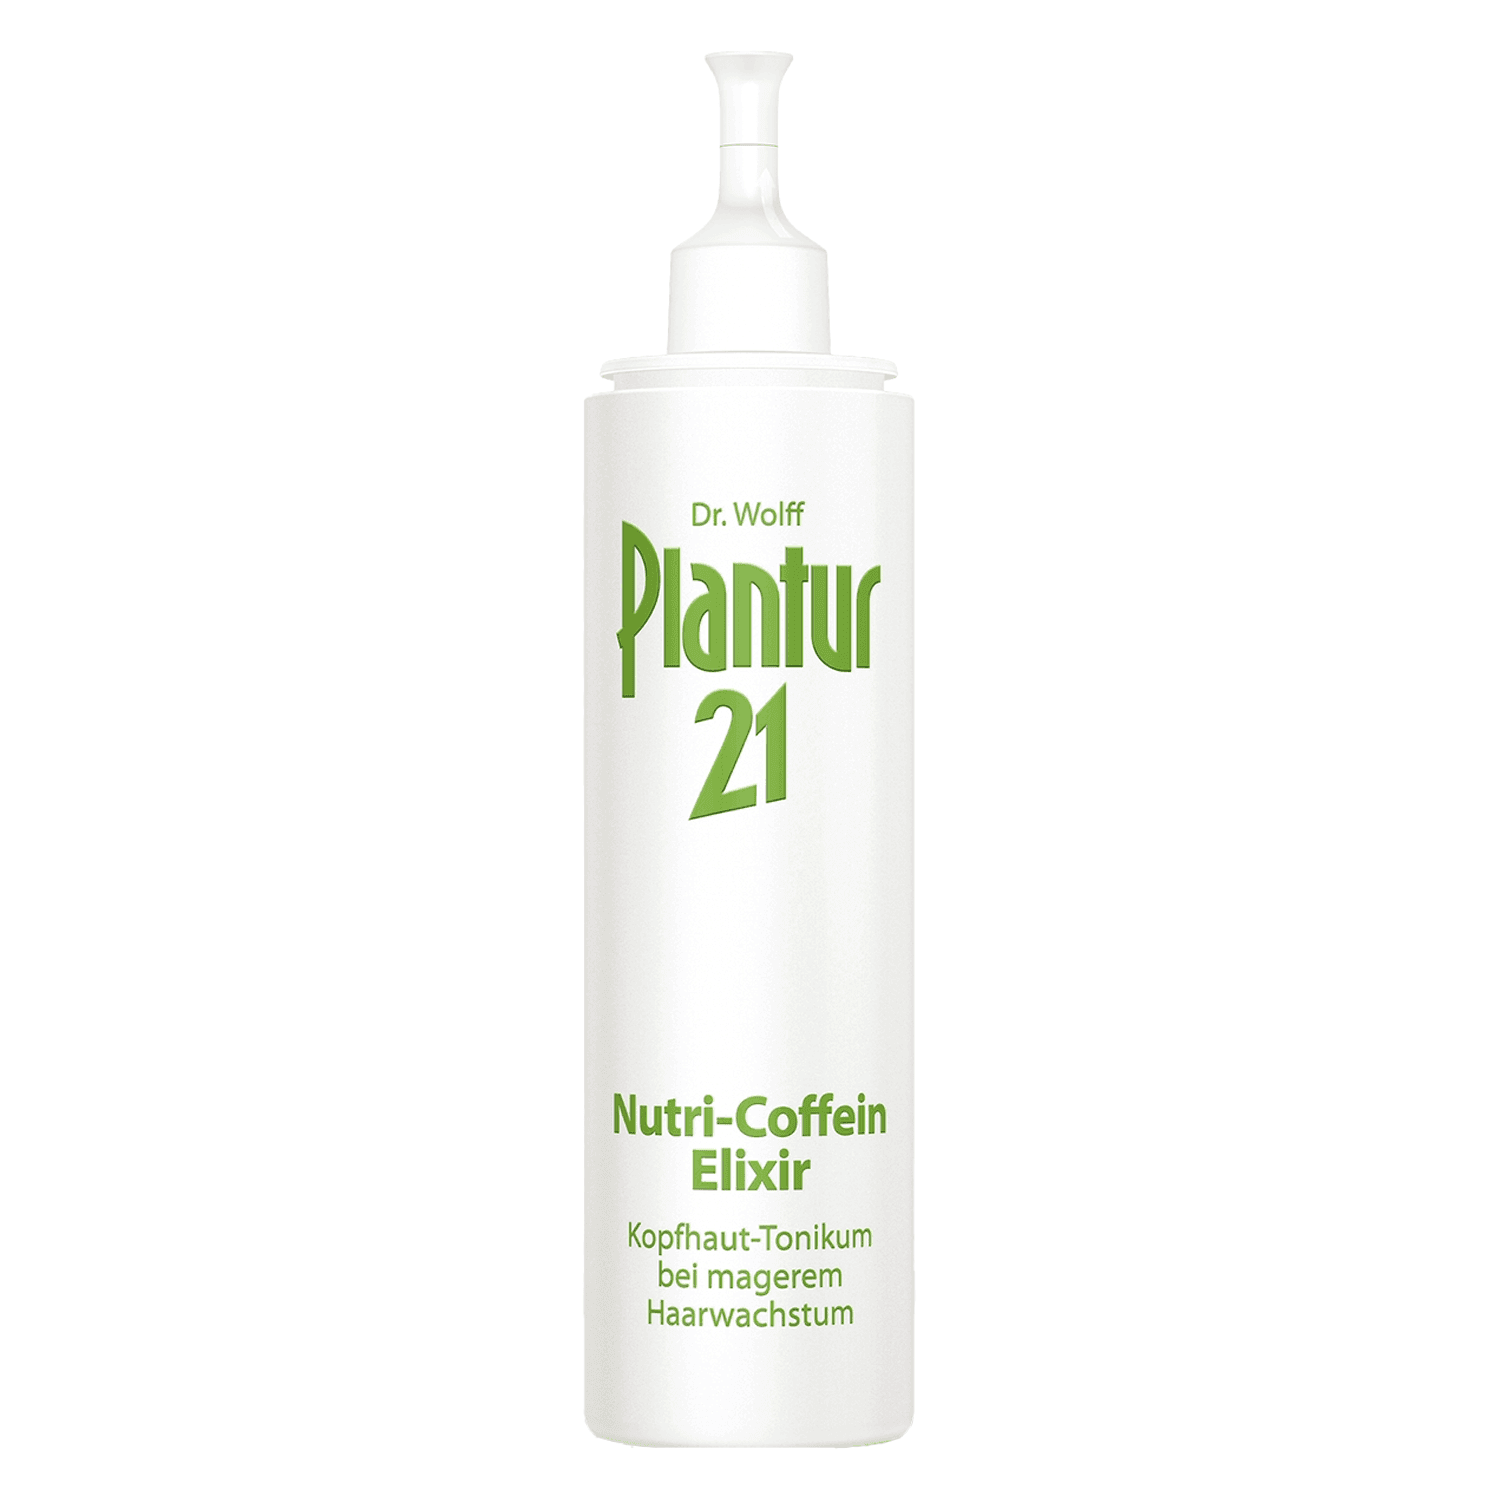 Plantur 21 - Nutri-Coffein Elixir